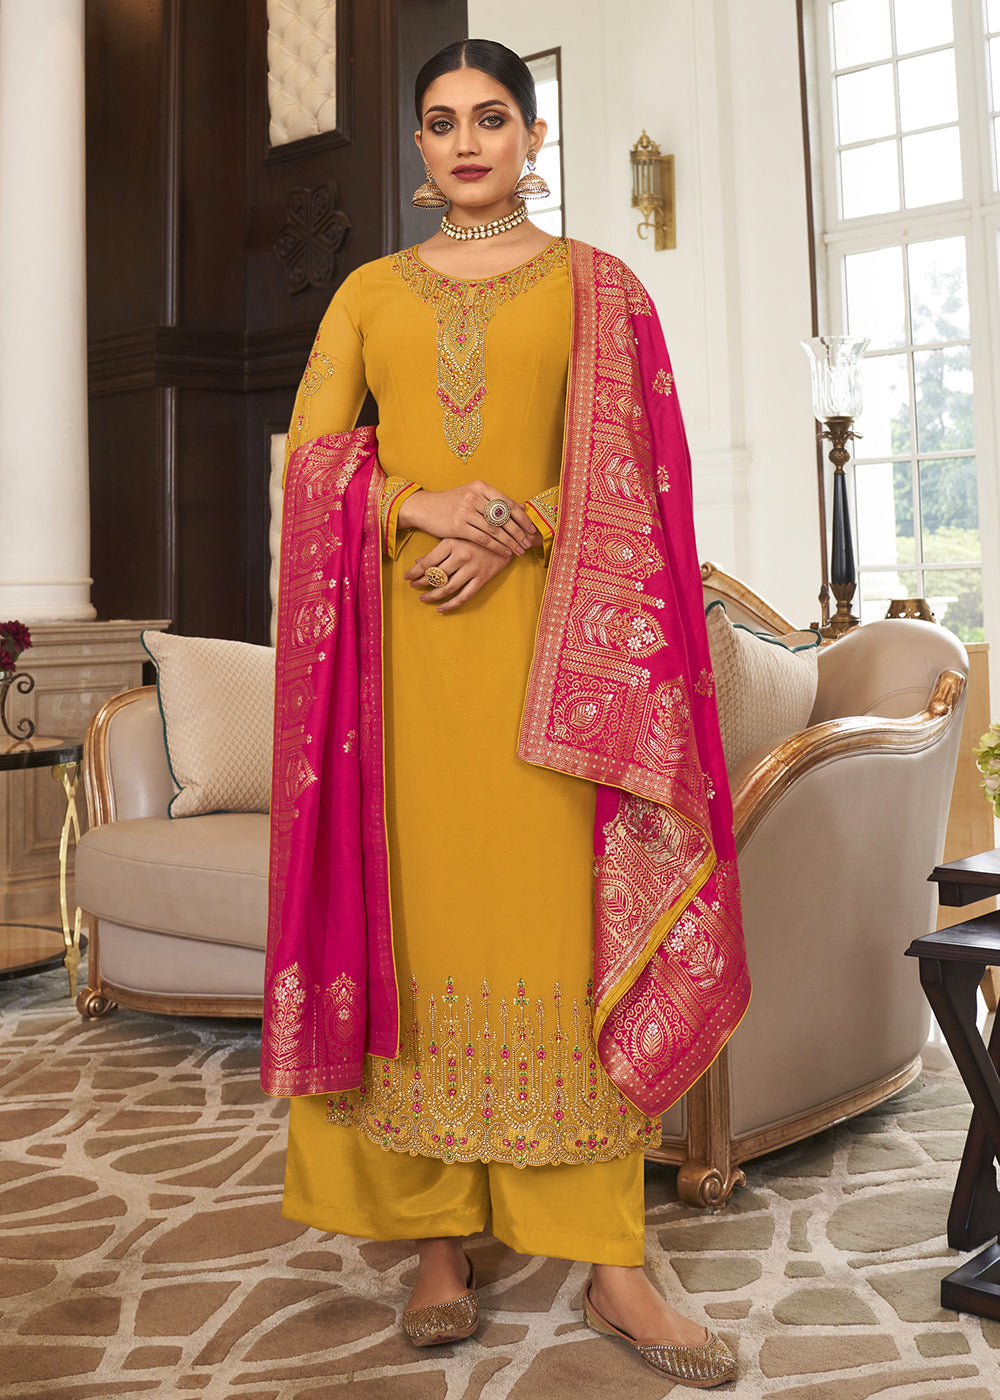 Buy Now Wedding Party Elegant Yellow Thread & Zari Salwar SuitOnline in USA, UK, Canada & Worldwide at Empress Clothing.